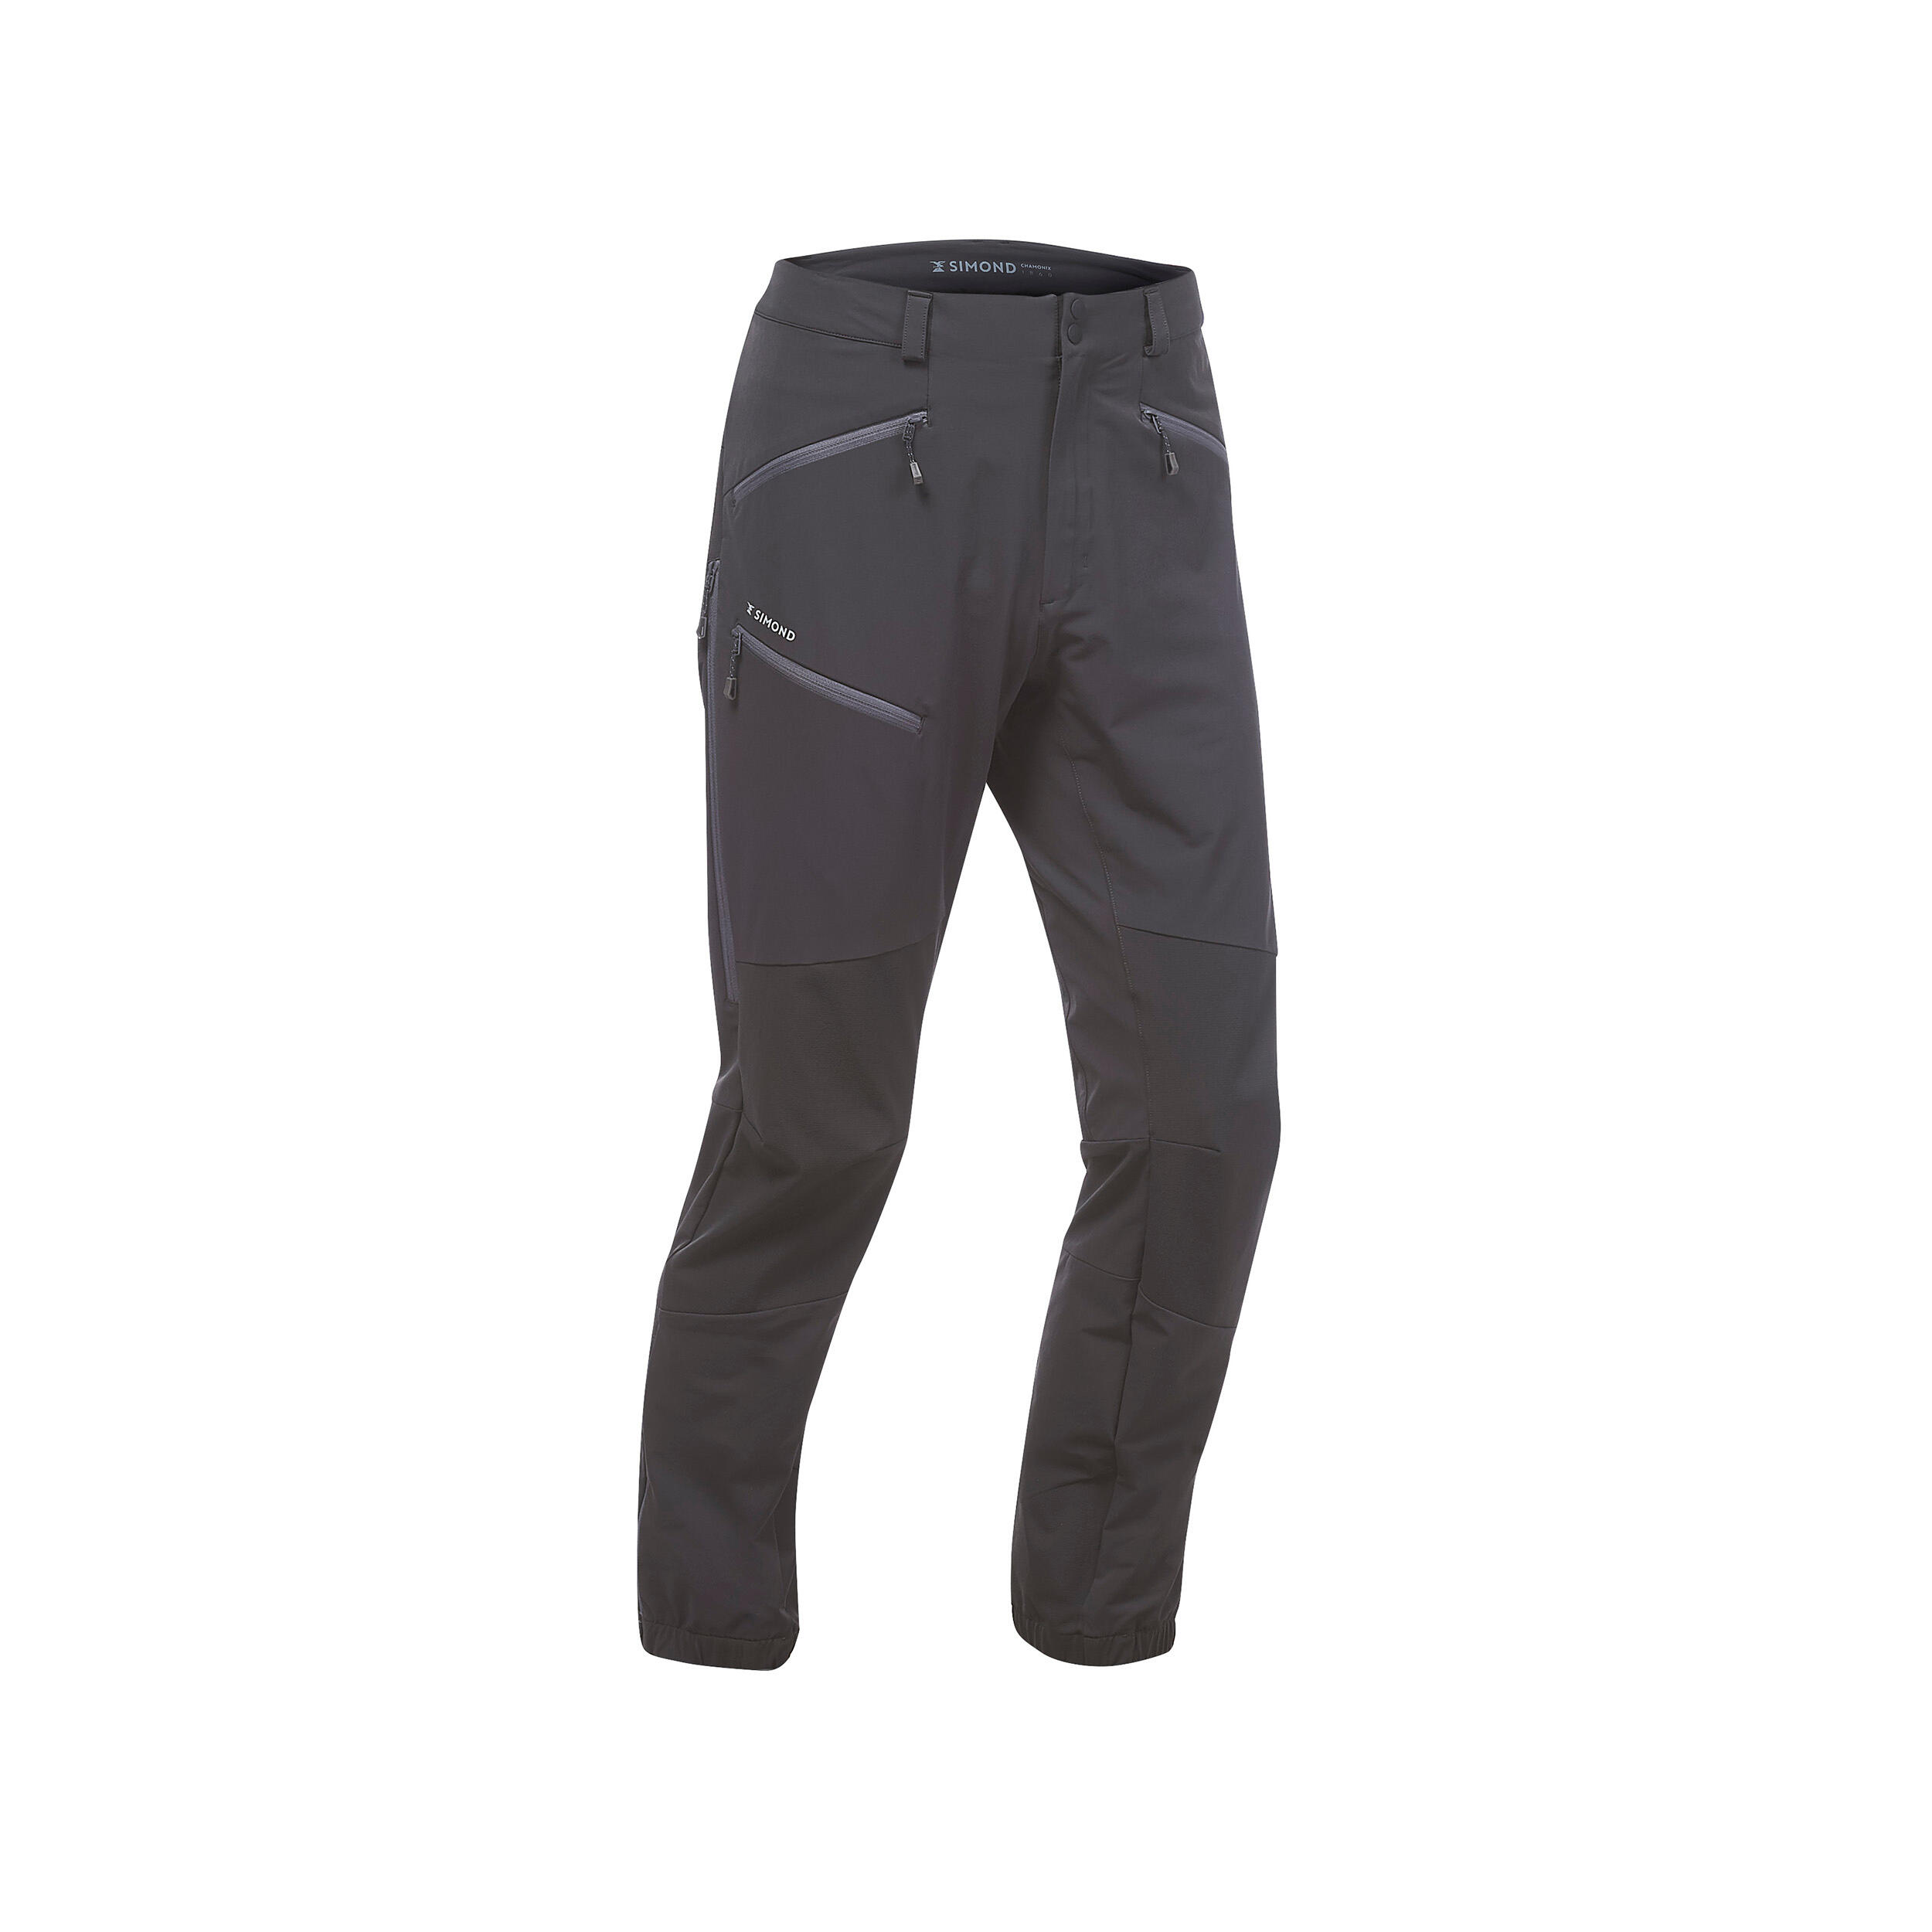 Men’s Breathable Warm Pants - SH 500 Grey